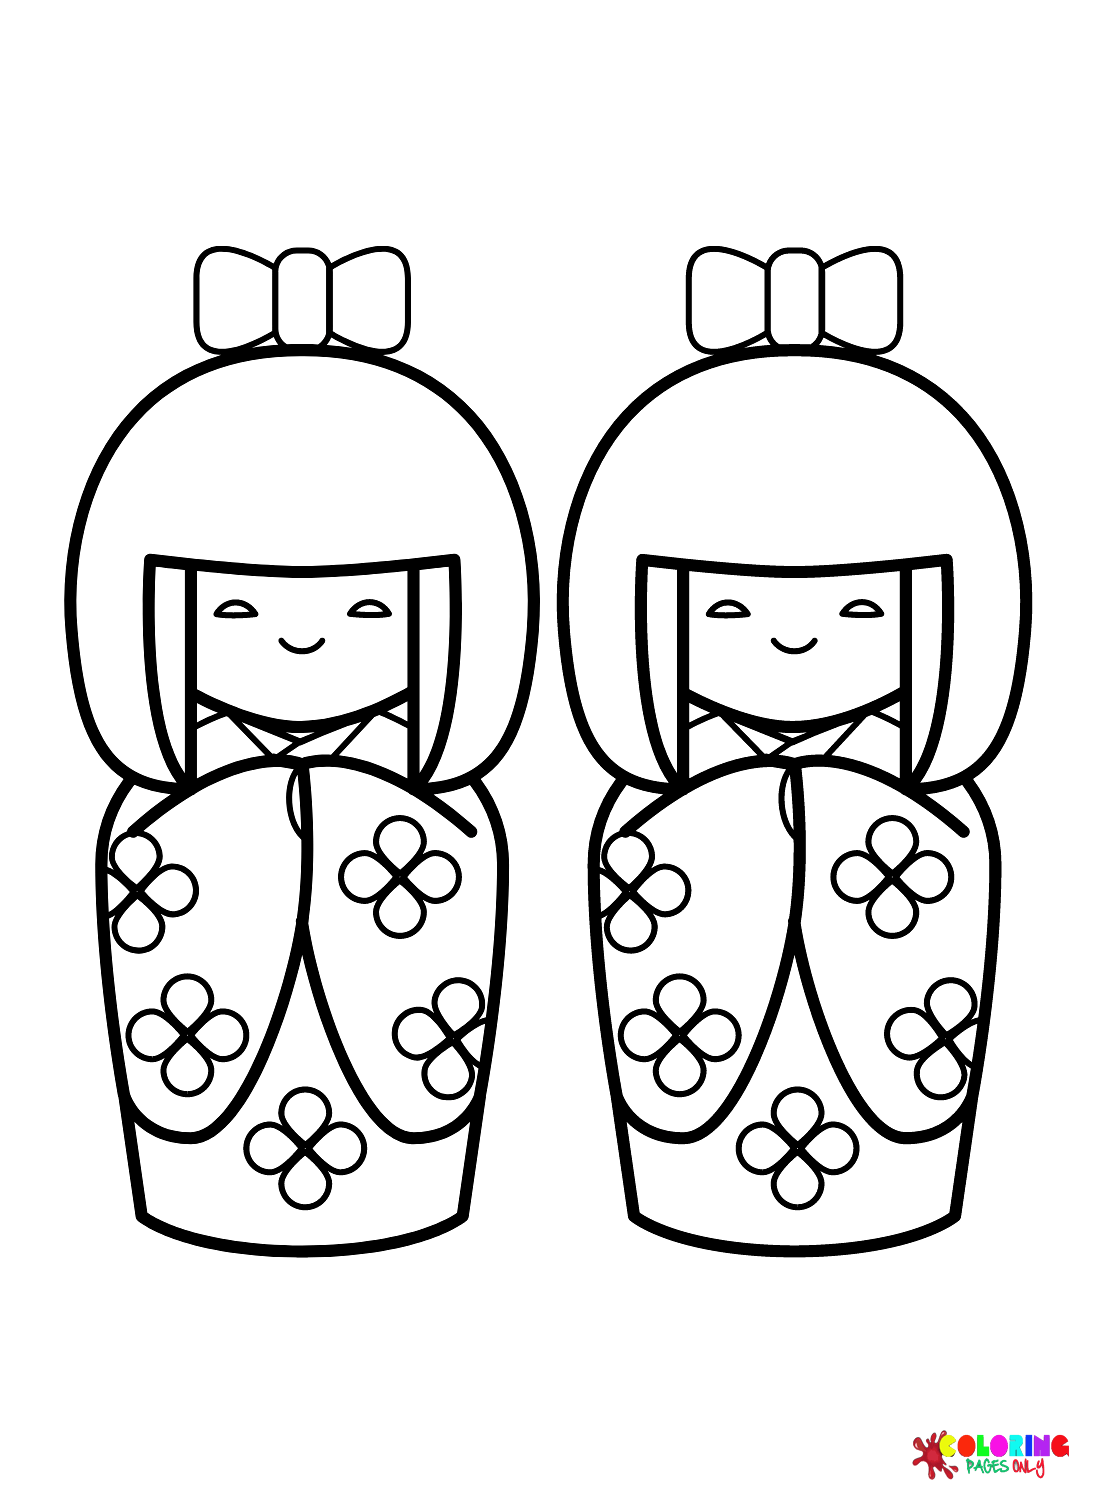 Two Kokeshi Dolls from Kokeshi Doll